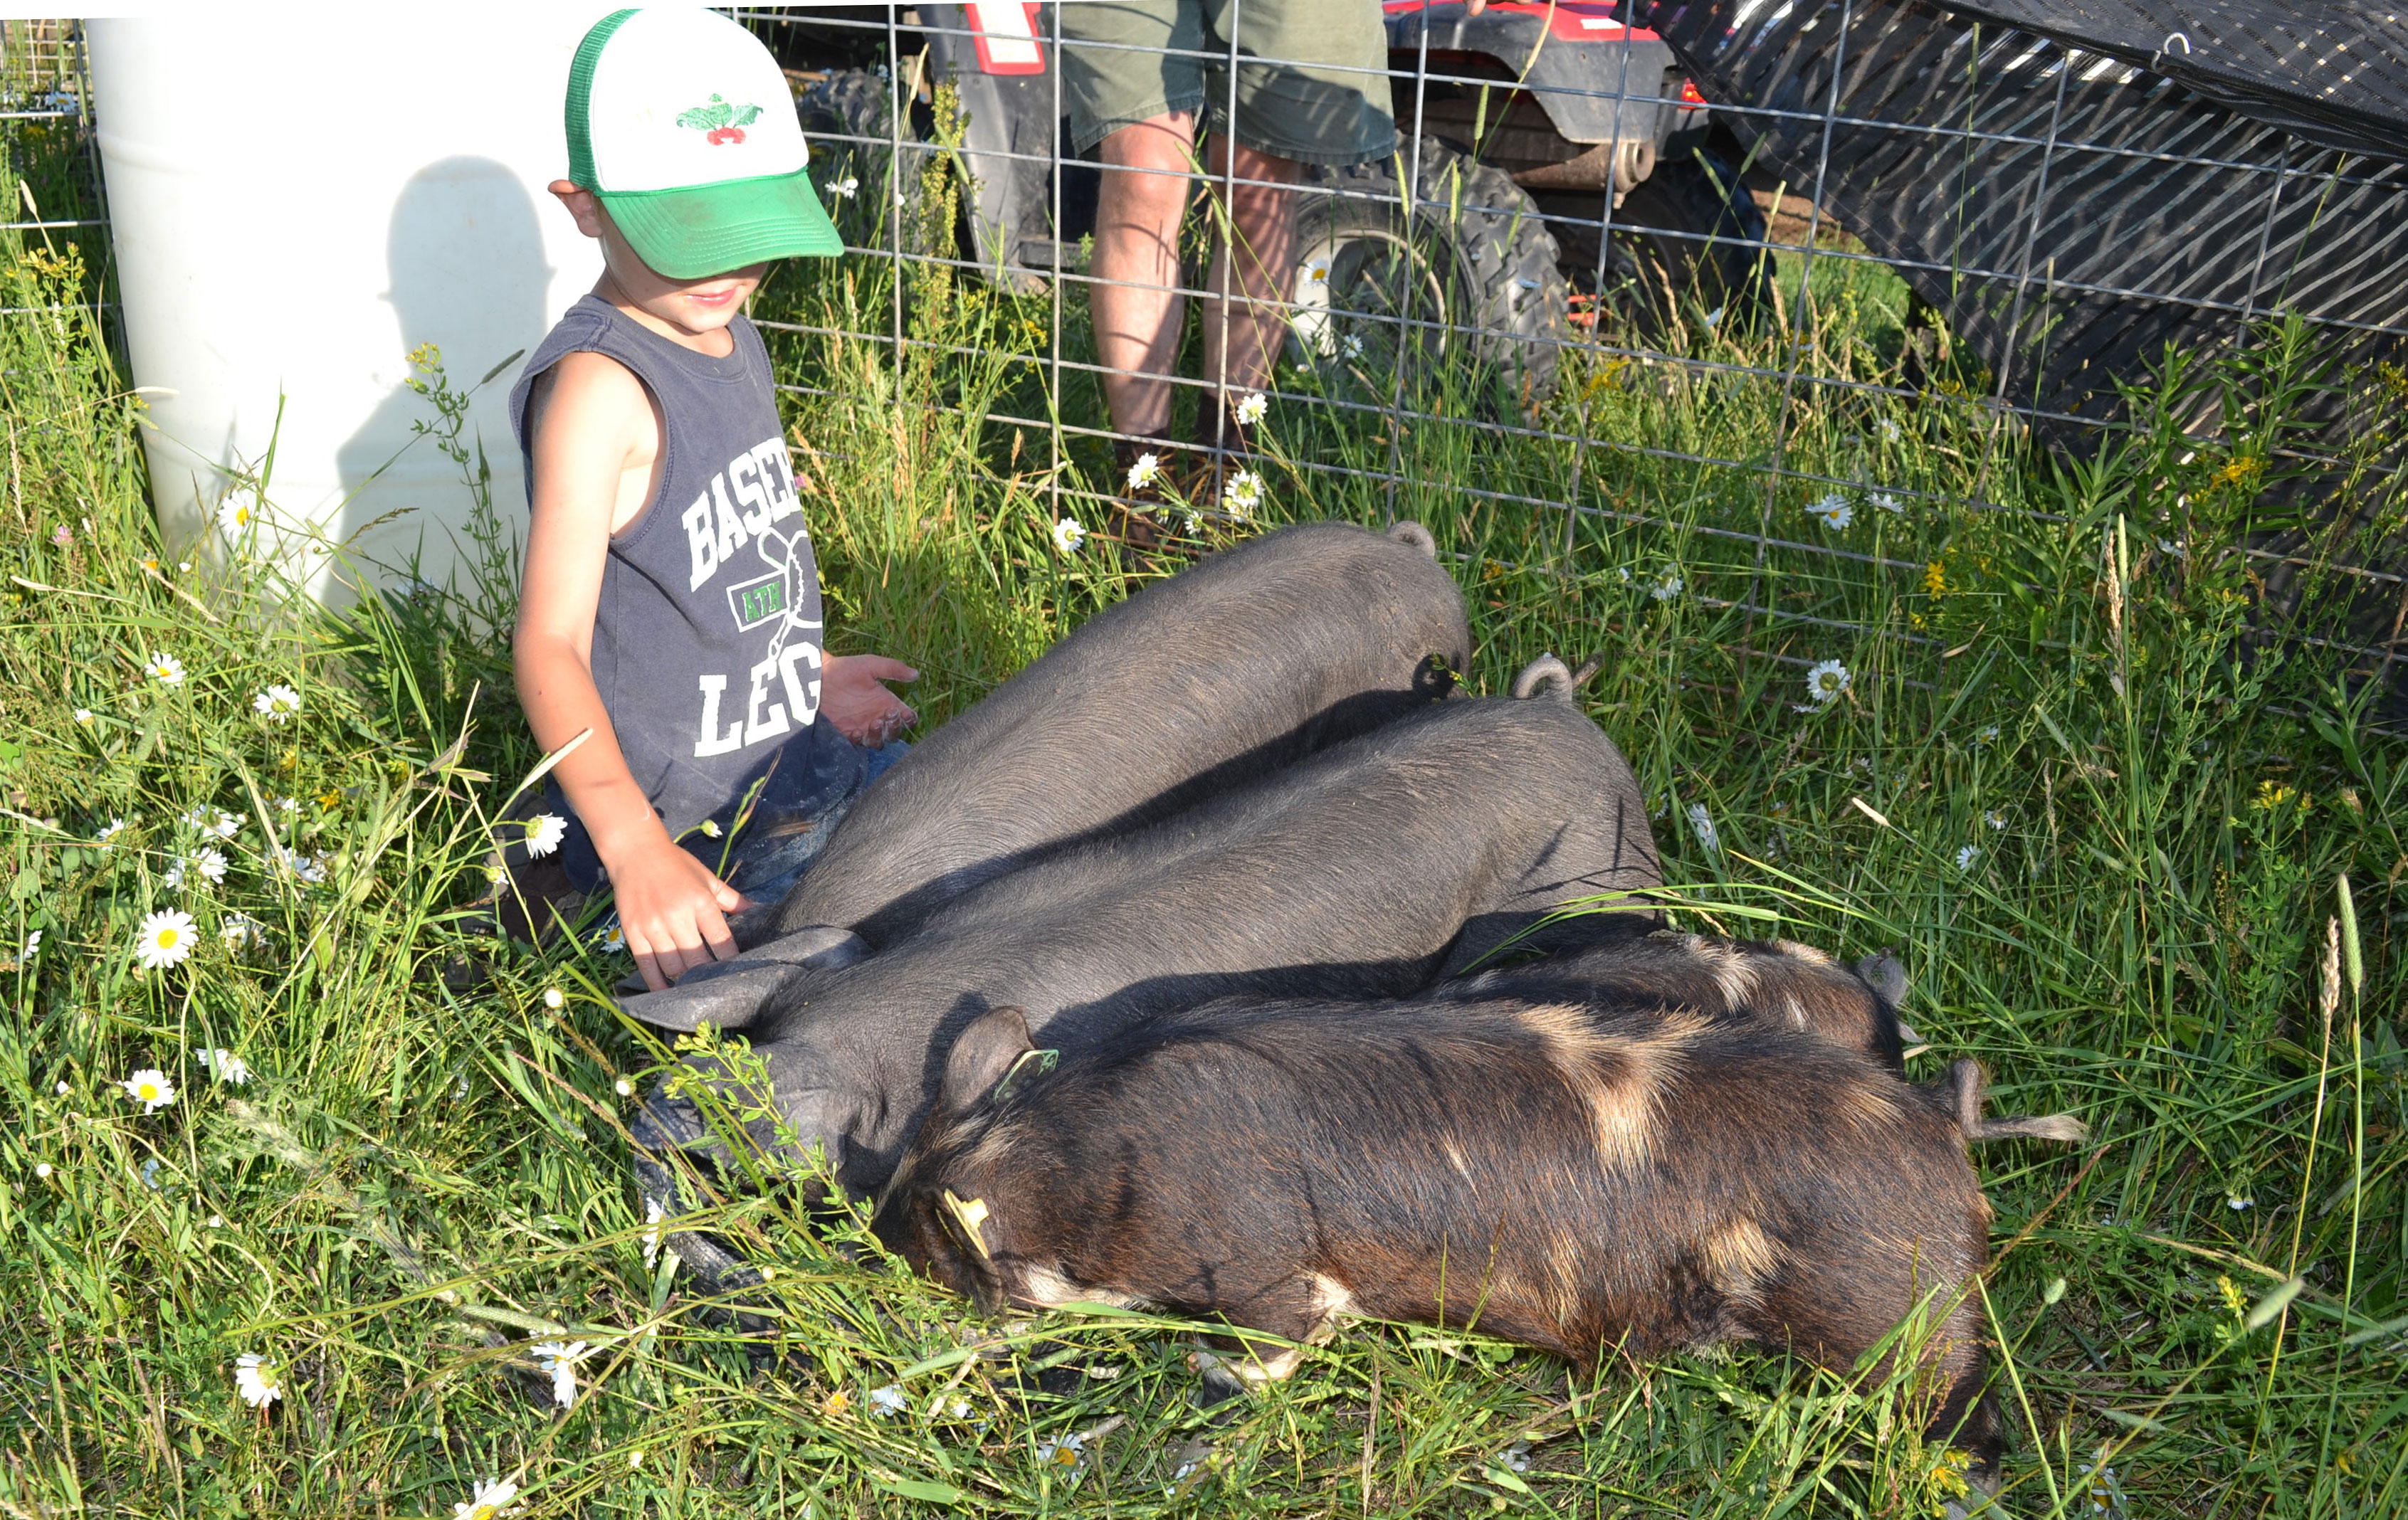 Idaho Pasture Pigs and Large Black Hogs